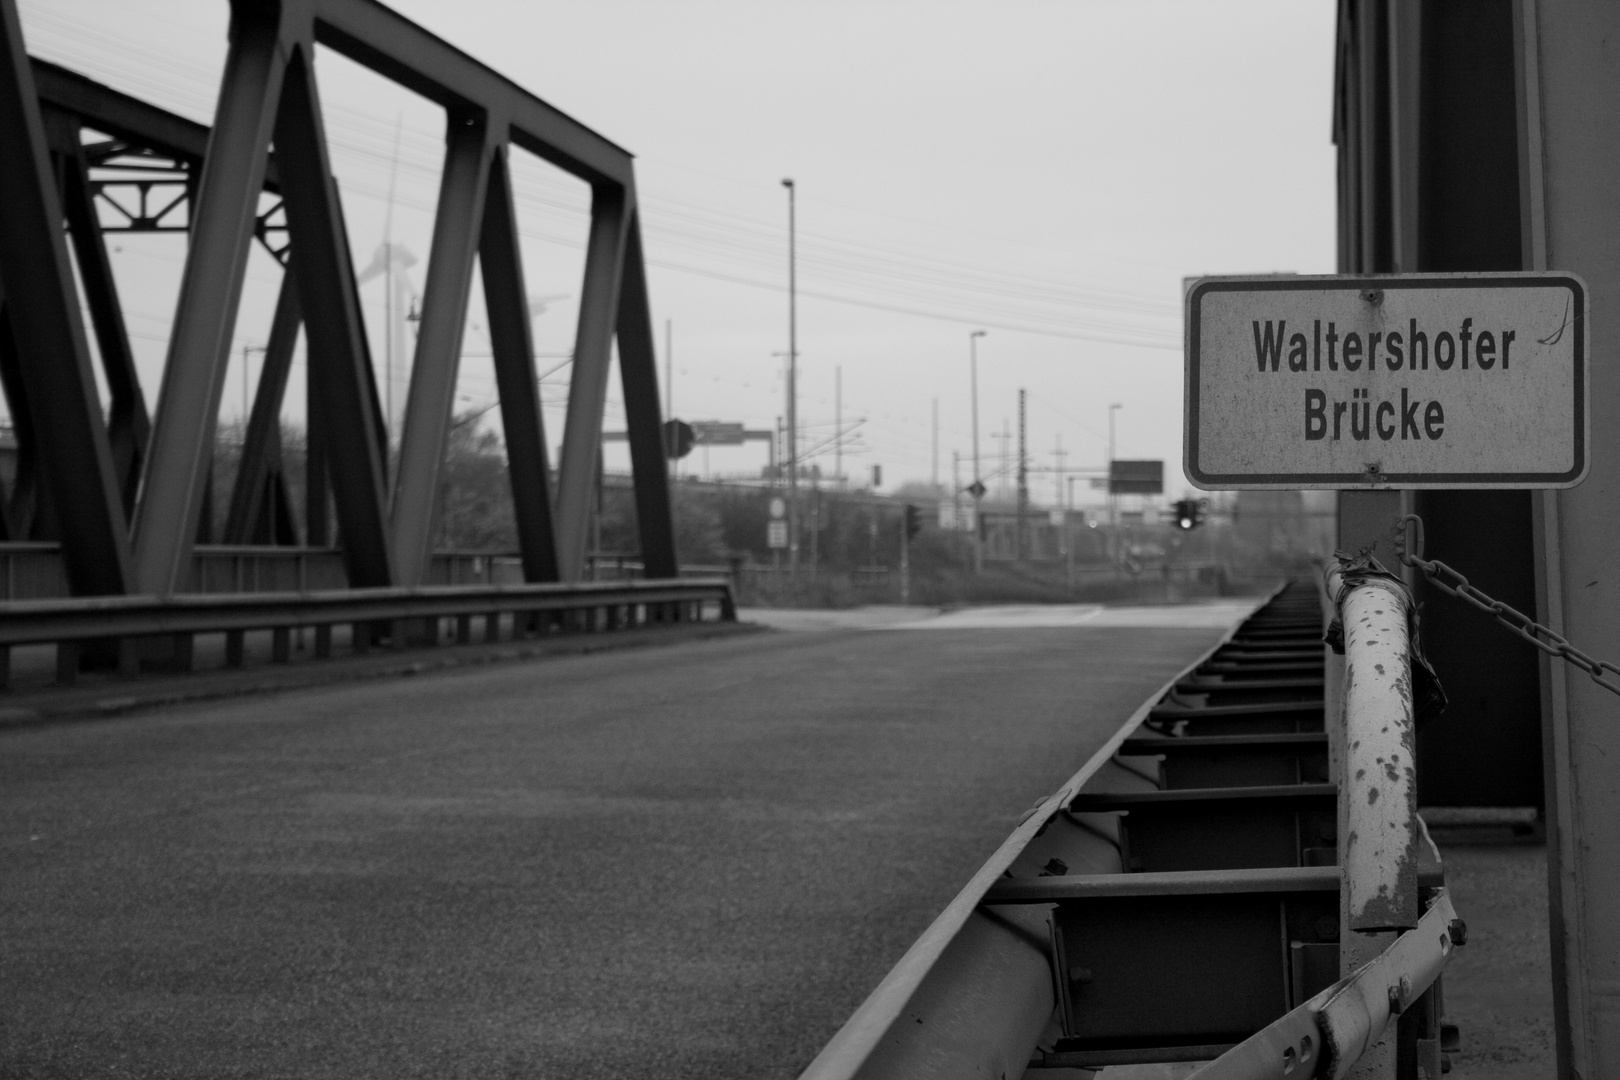 Waltershofer Brücke